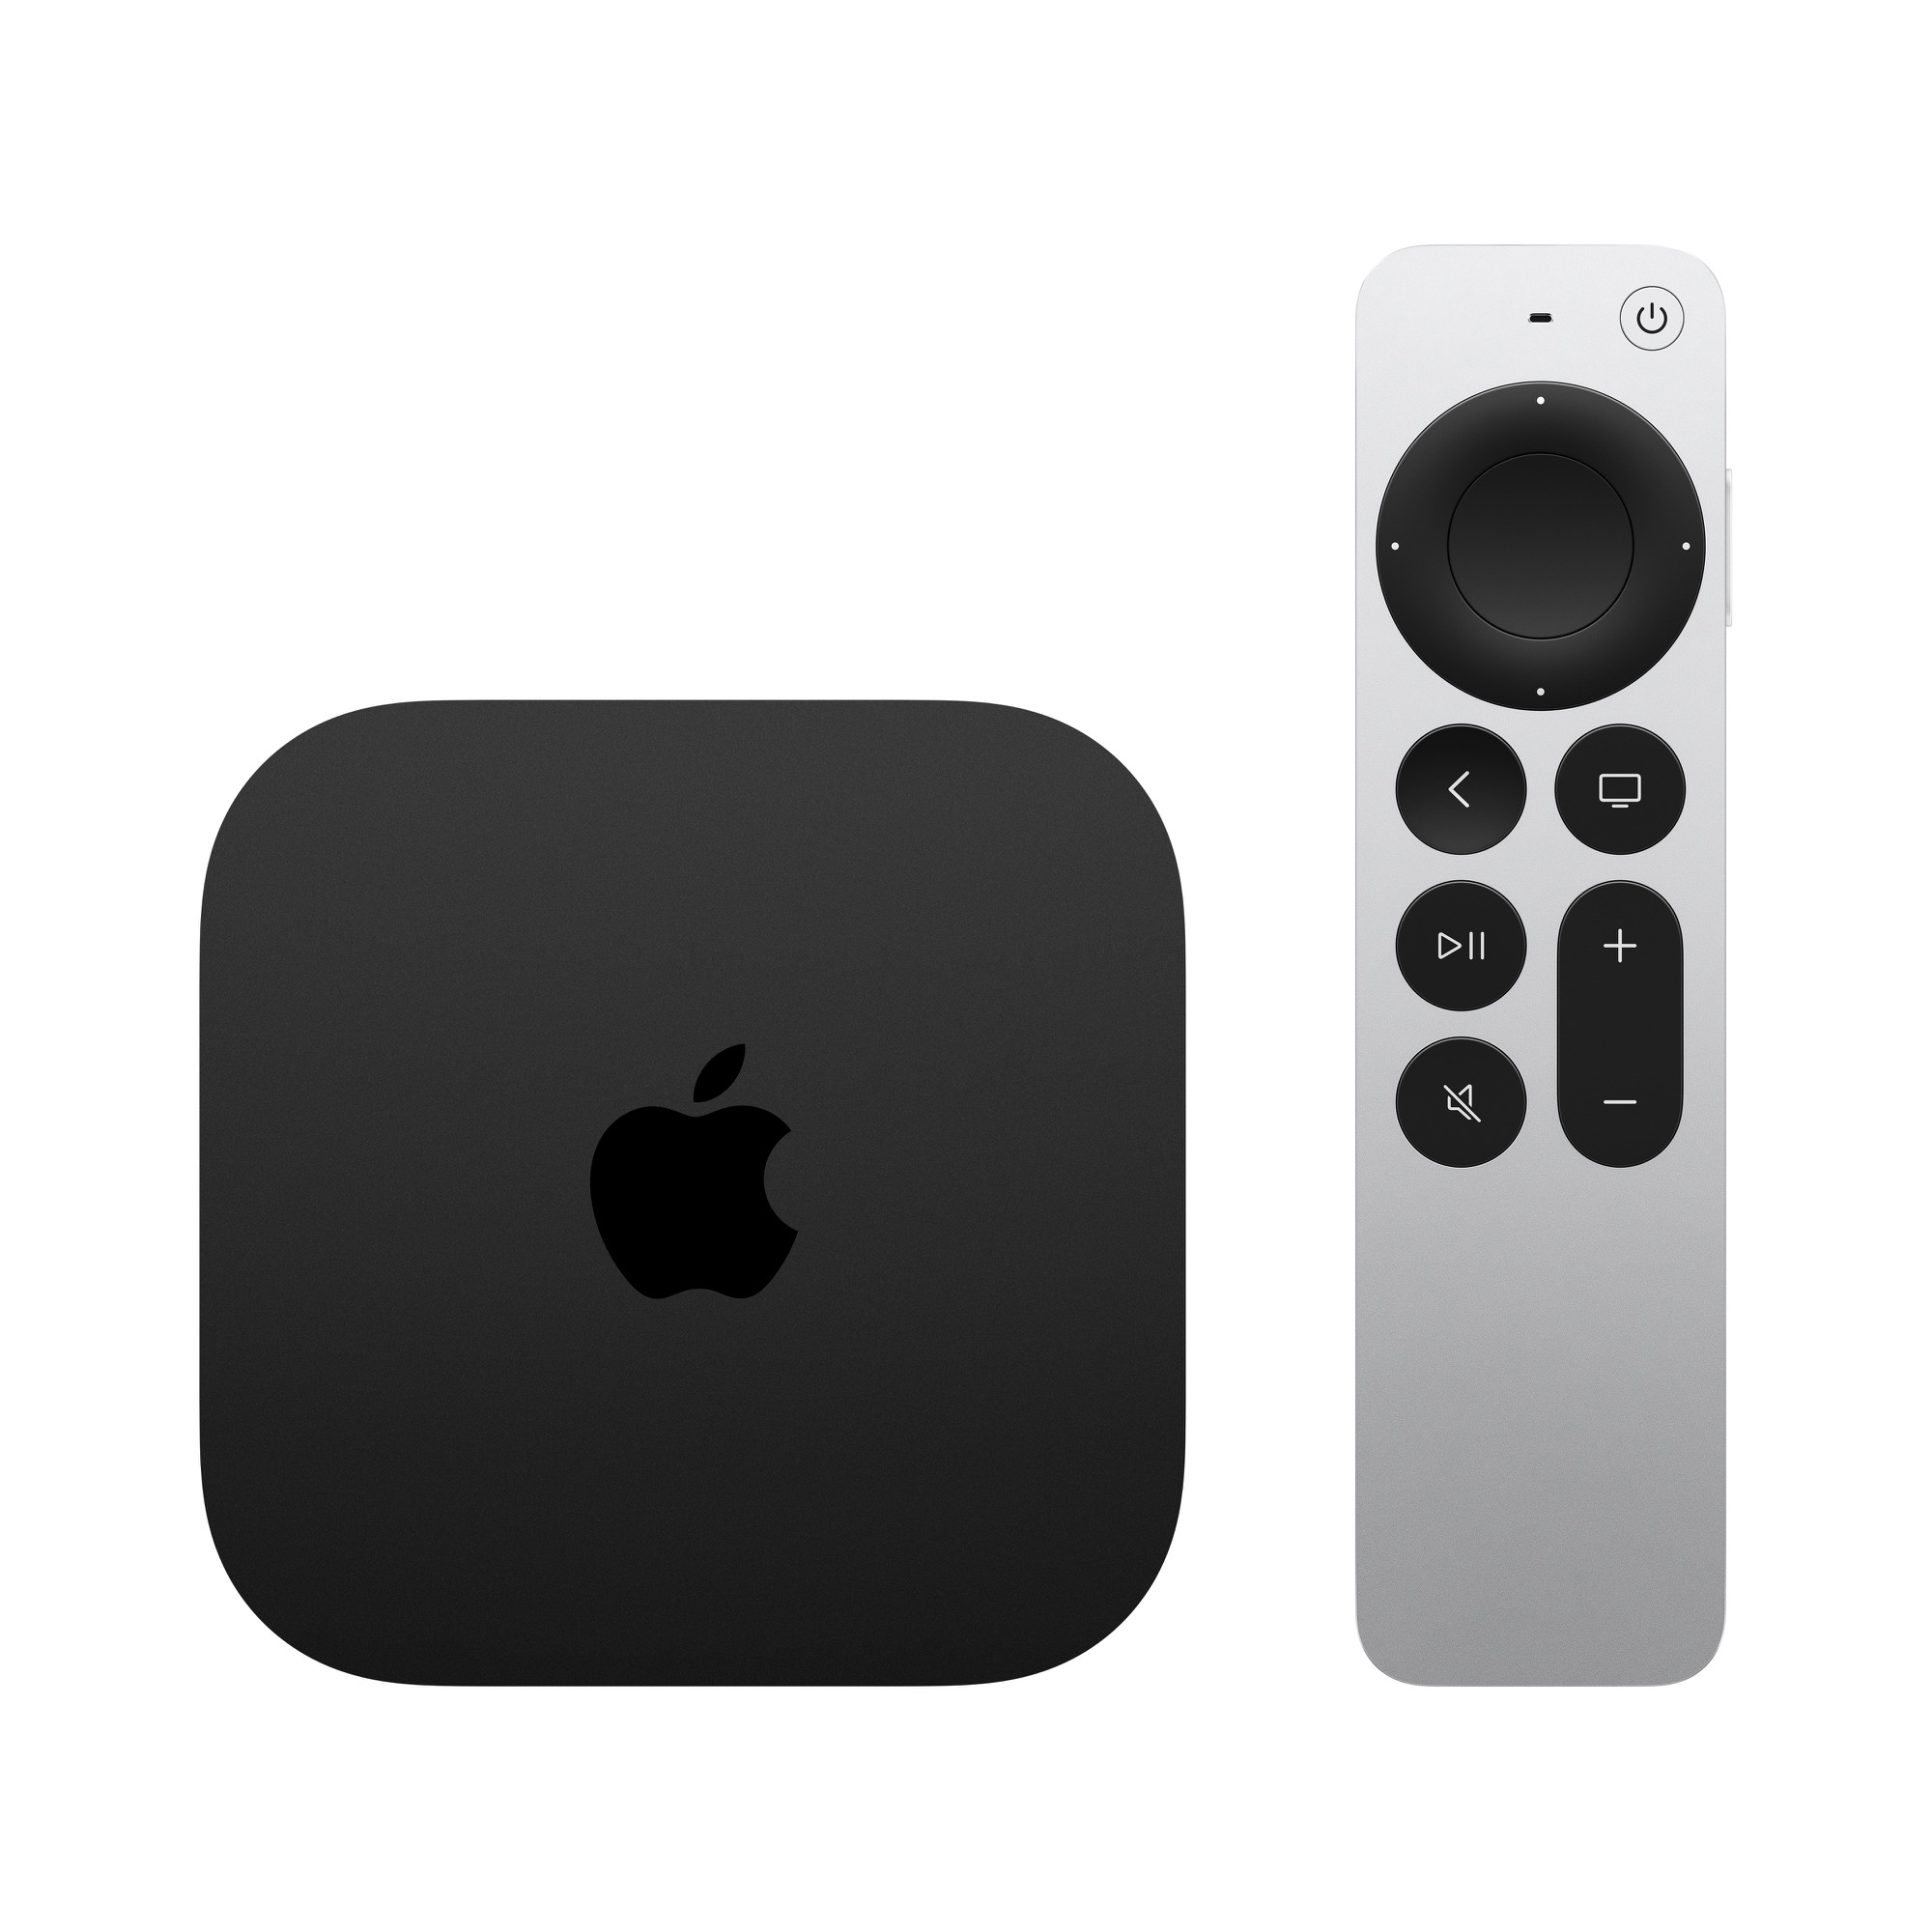 Apple TV 4K Wi‑Fi + Ethernet - 128GB (2022)